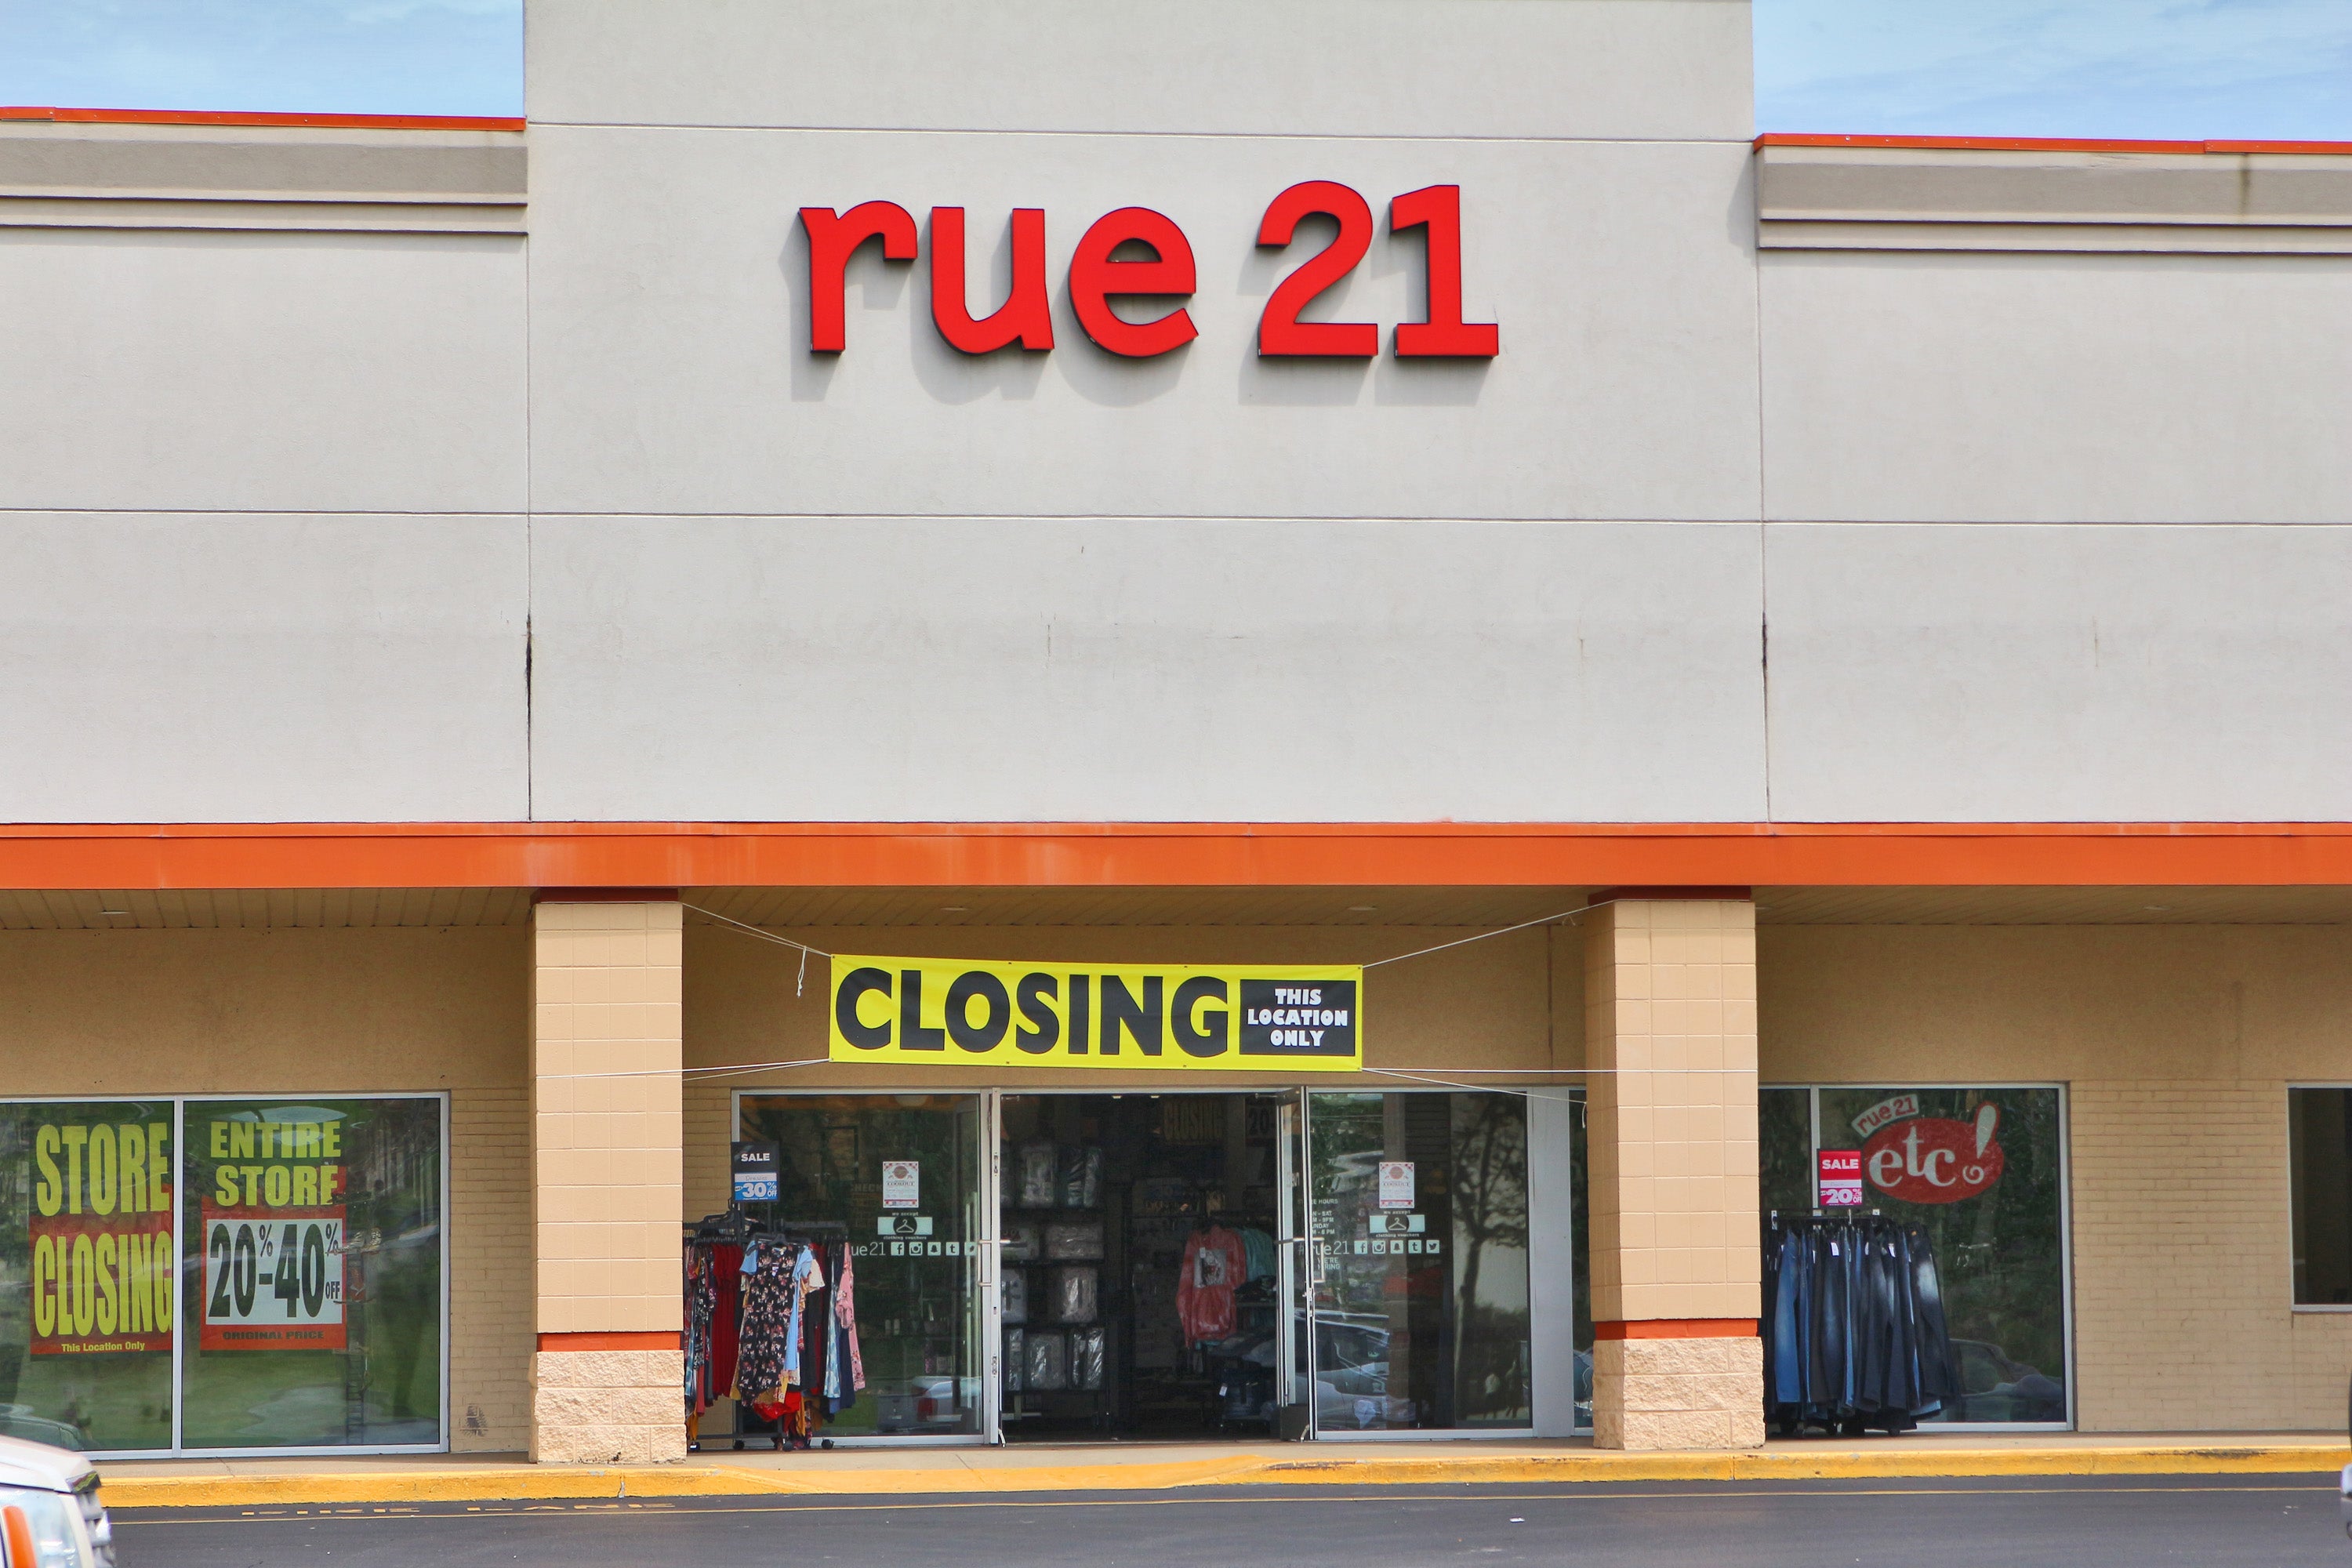 rue21 closing 400 stores, including Danville location The Advocate